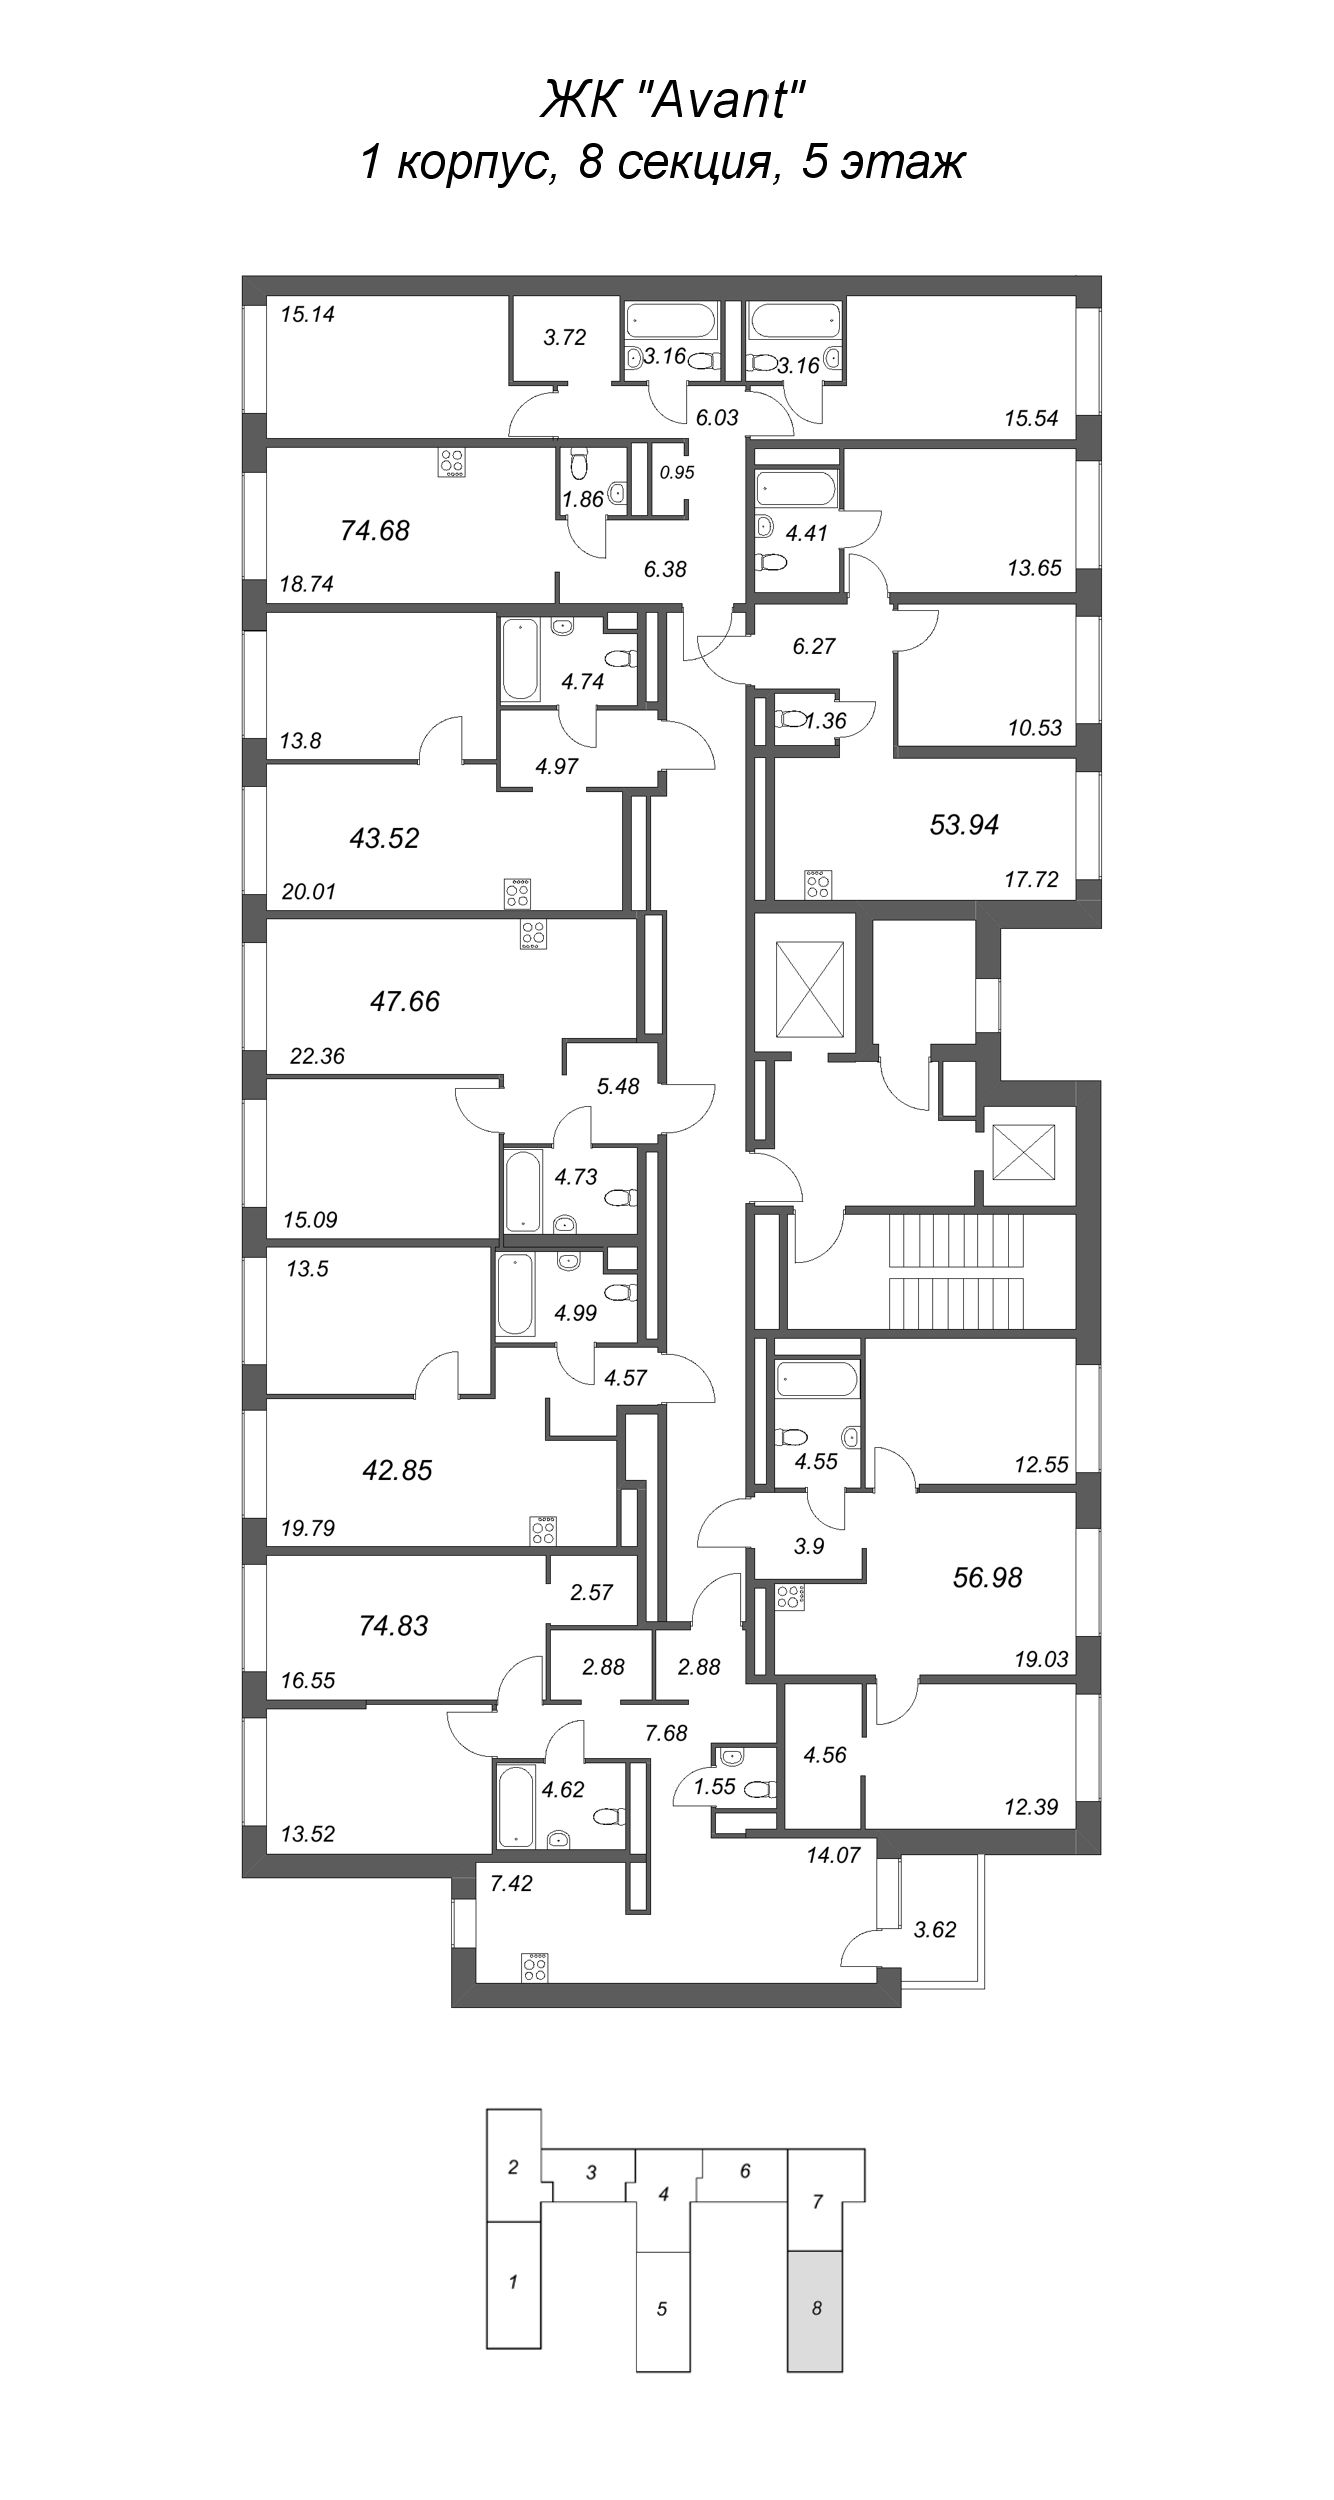 2-комнатная (Евро) квартира, 42.85 м² в ЖК "Avant" - планировка этажа